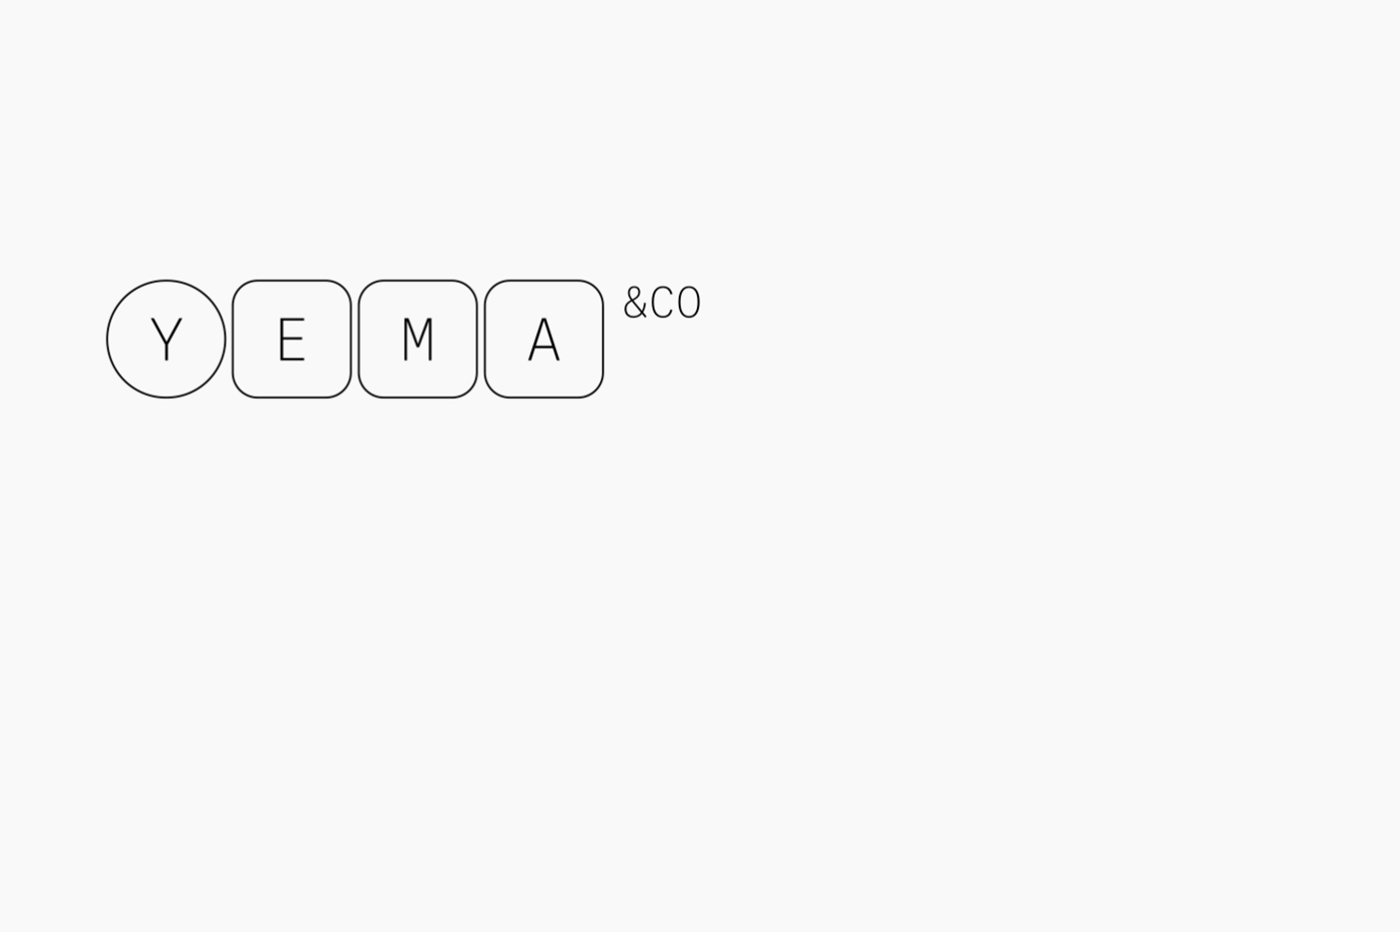 YEMA by Anagrama